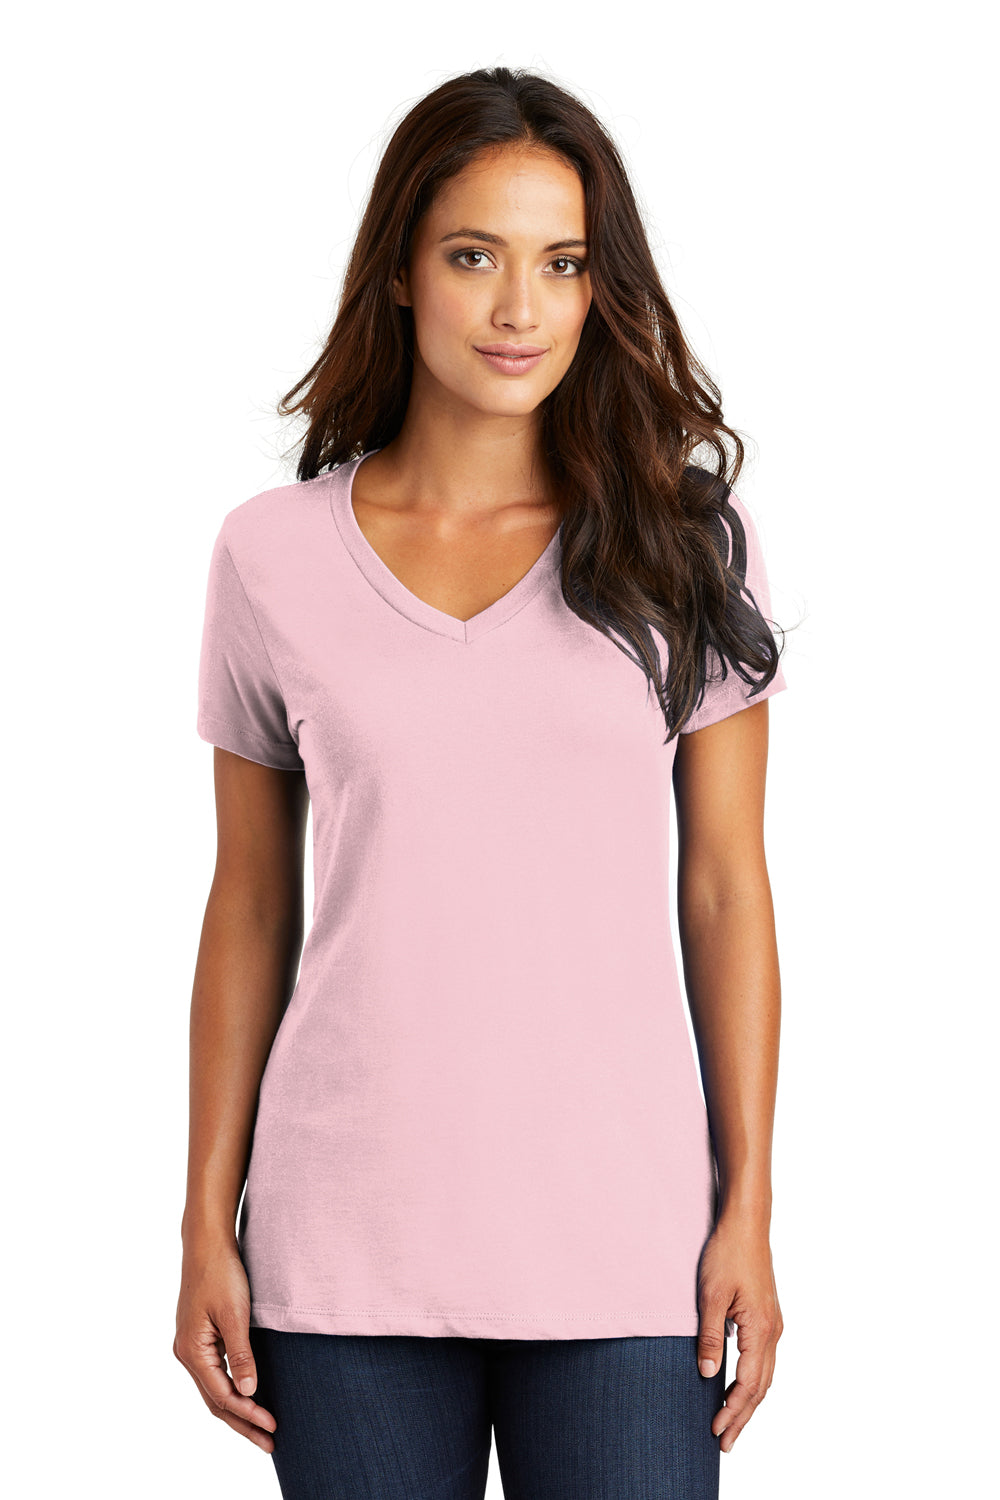 District DM1170L Womens Perfect Weight Short Sleeve V-Neck T-Shirt Light Pink Front